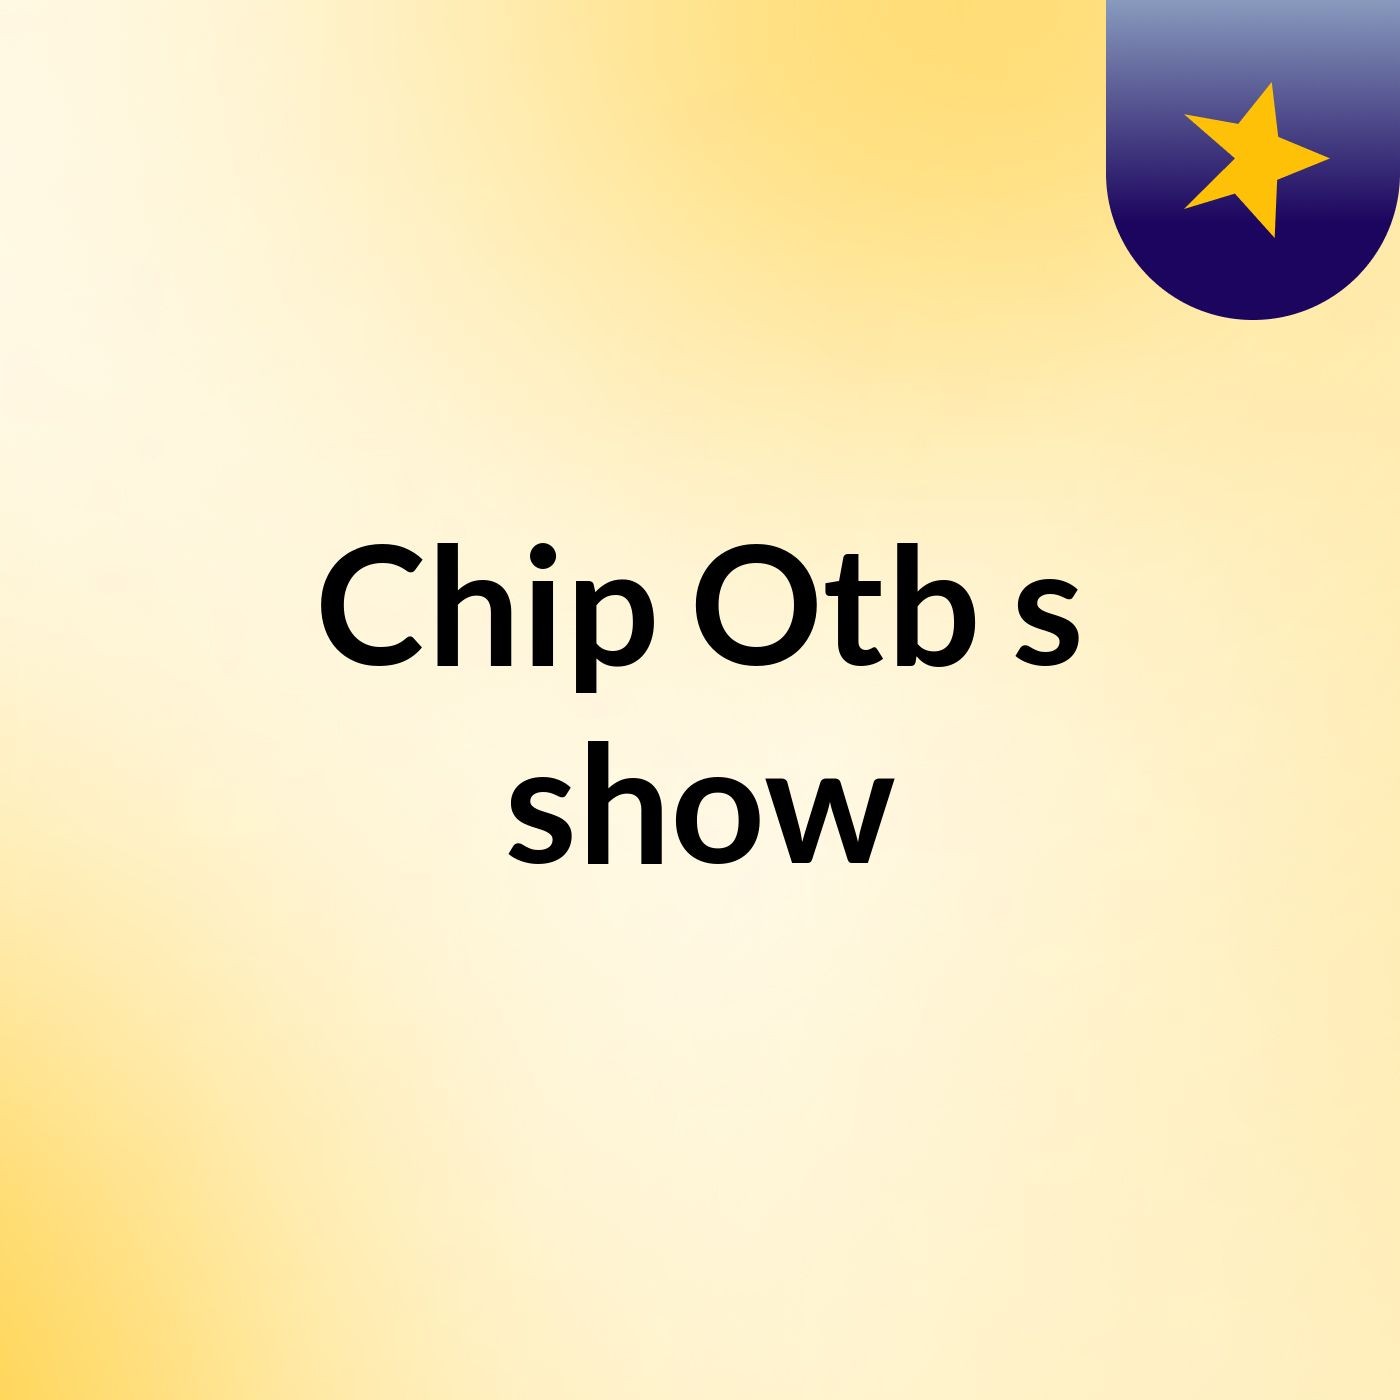 Chip Otb's show